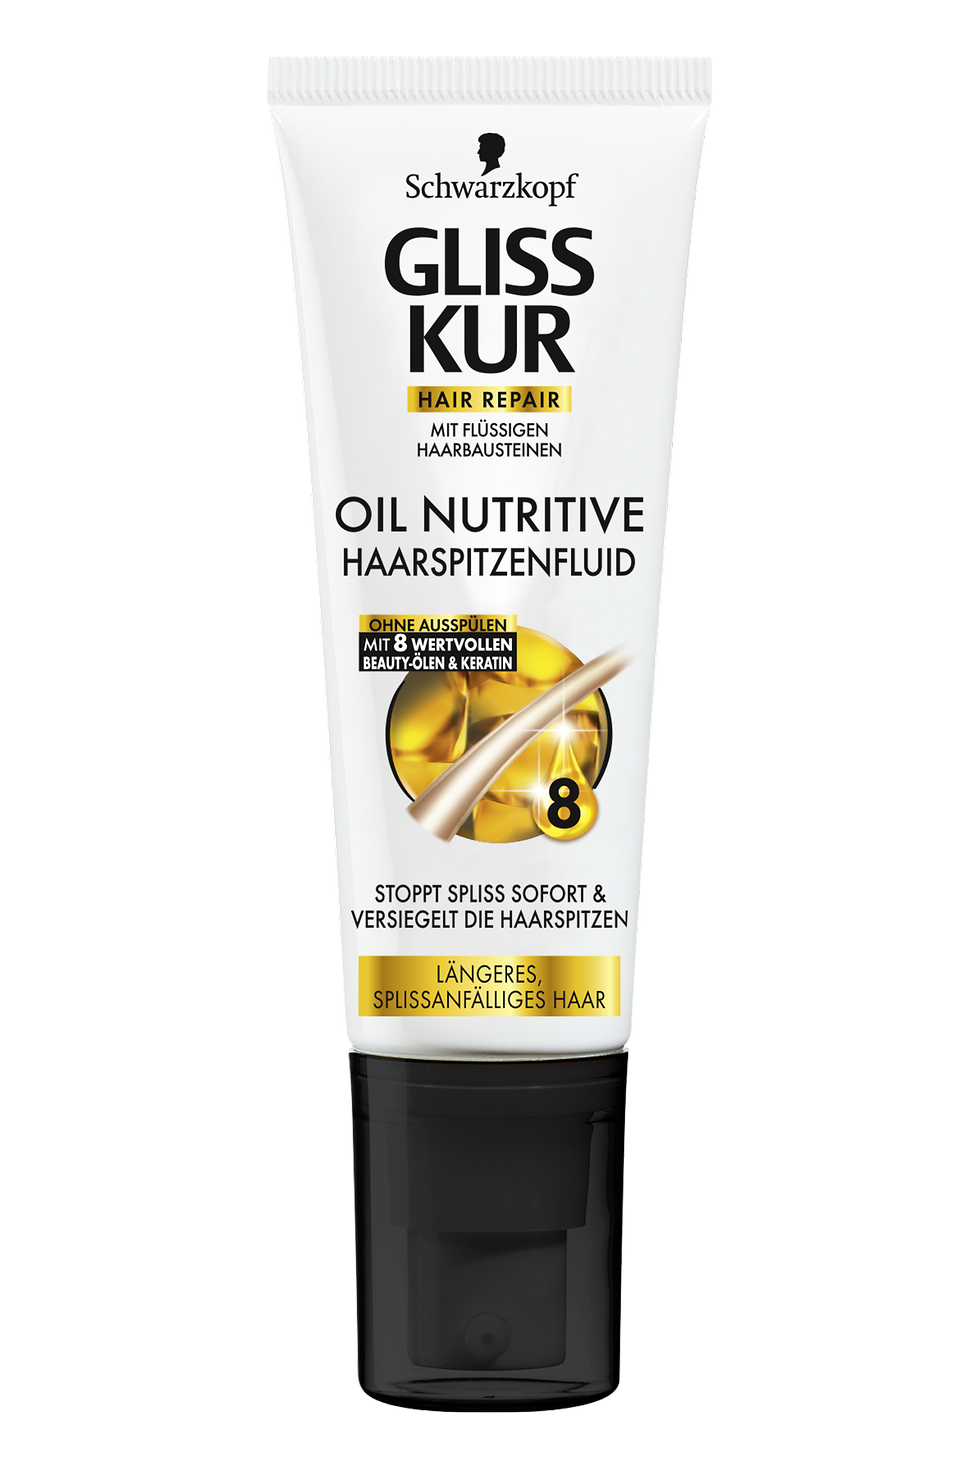 Gliss Kur Oil Nutritive Haarspitzenfluid